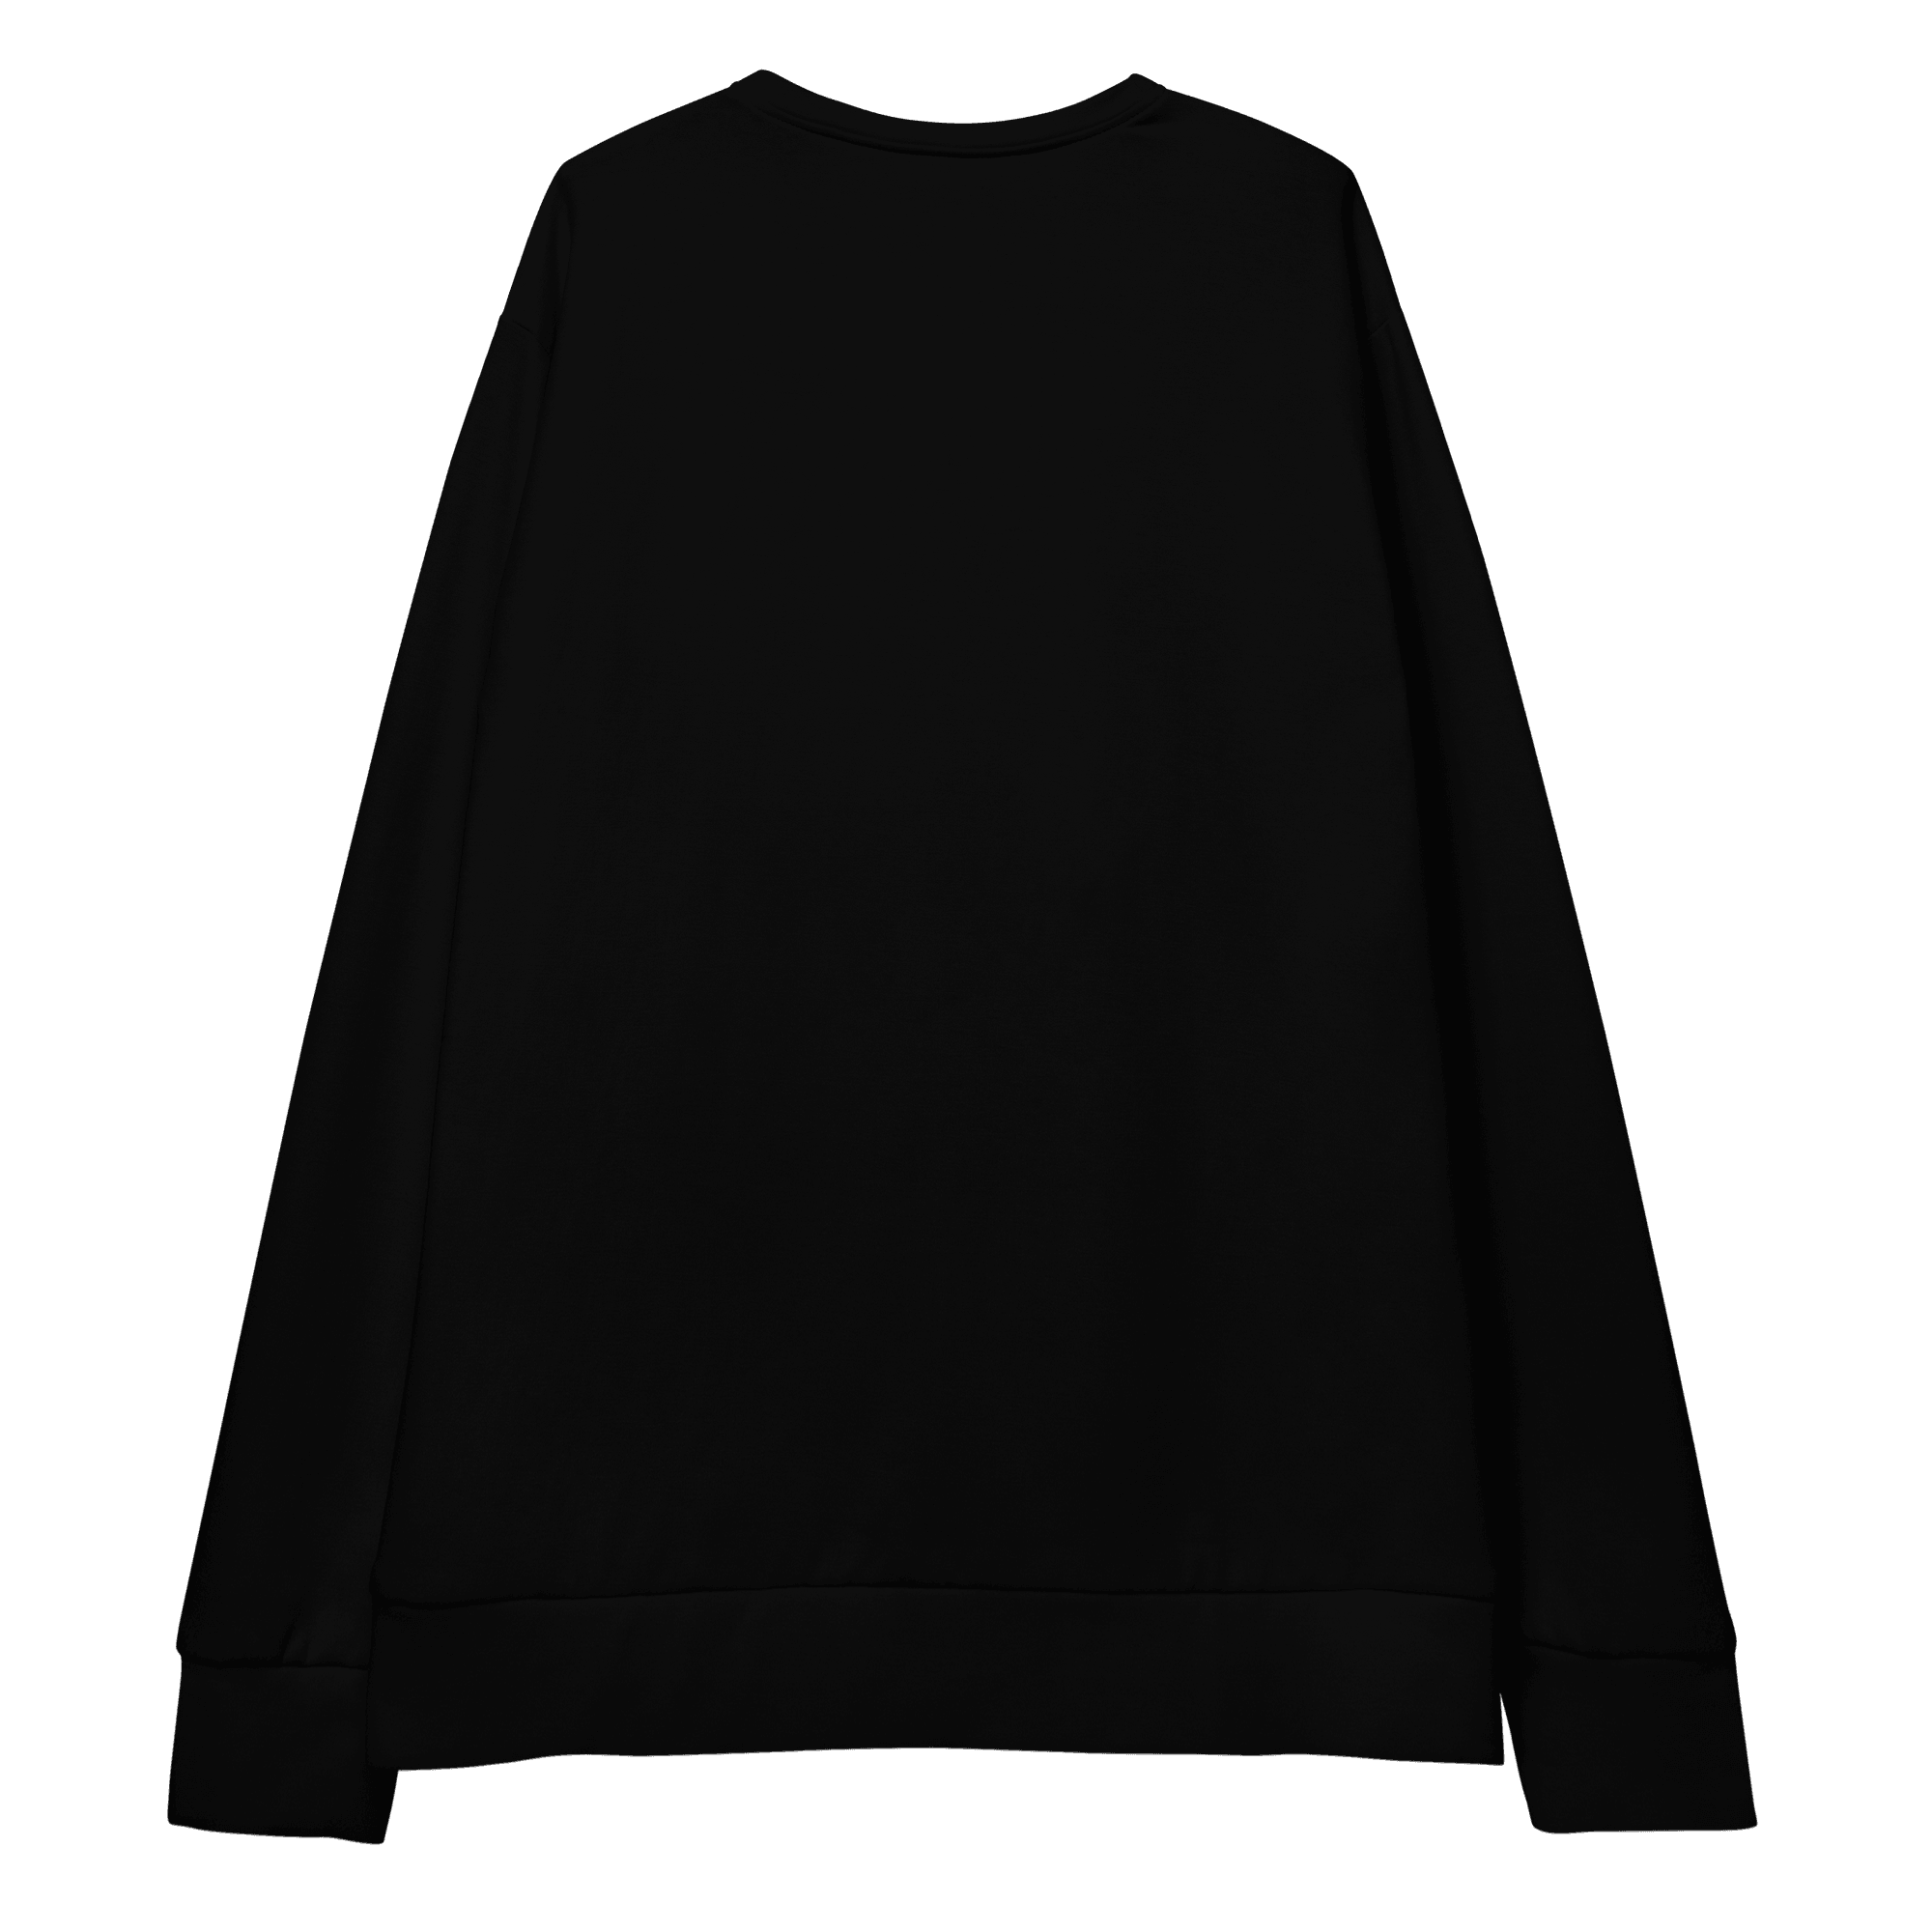 I miss me® Unisex Sweatshirt (7 pieces for sale) - Kikillo Club